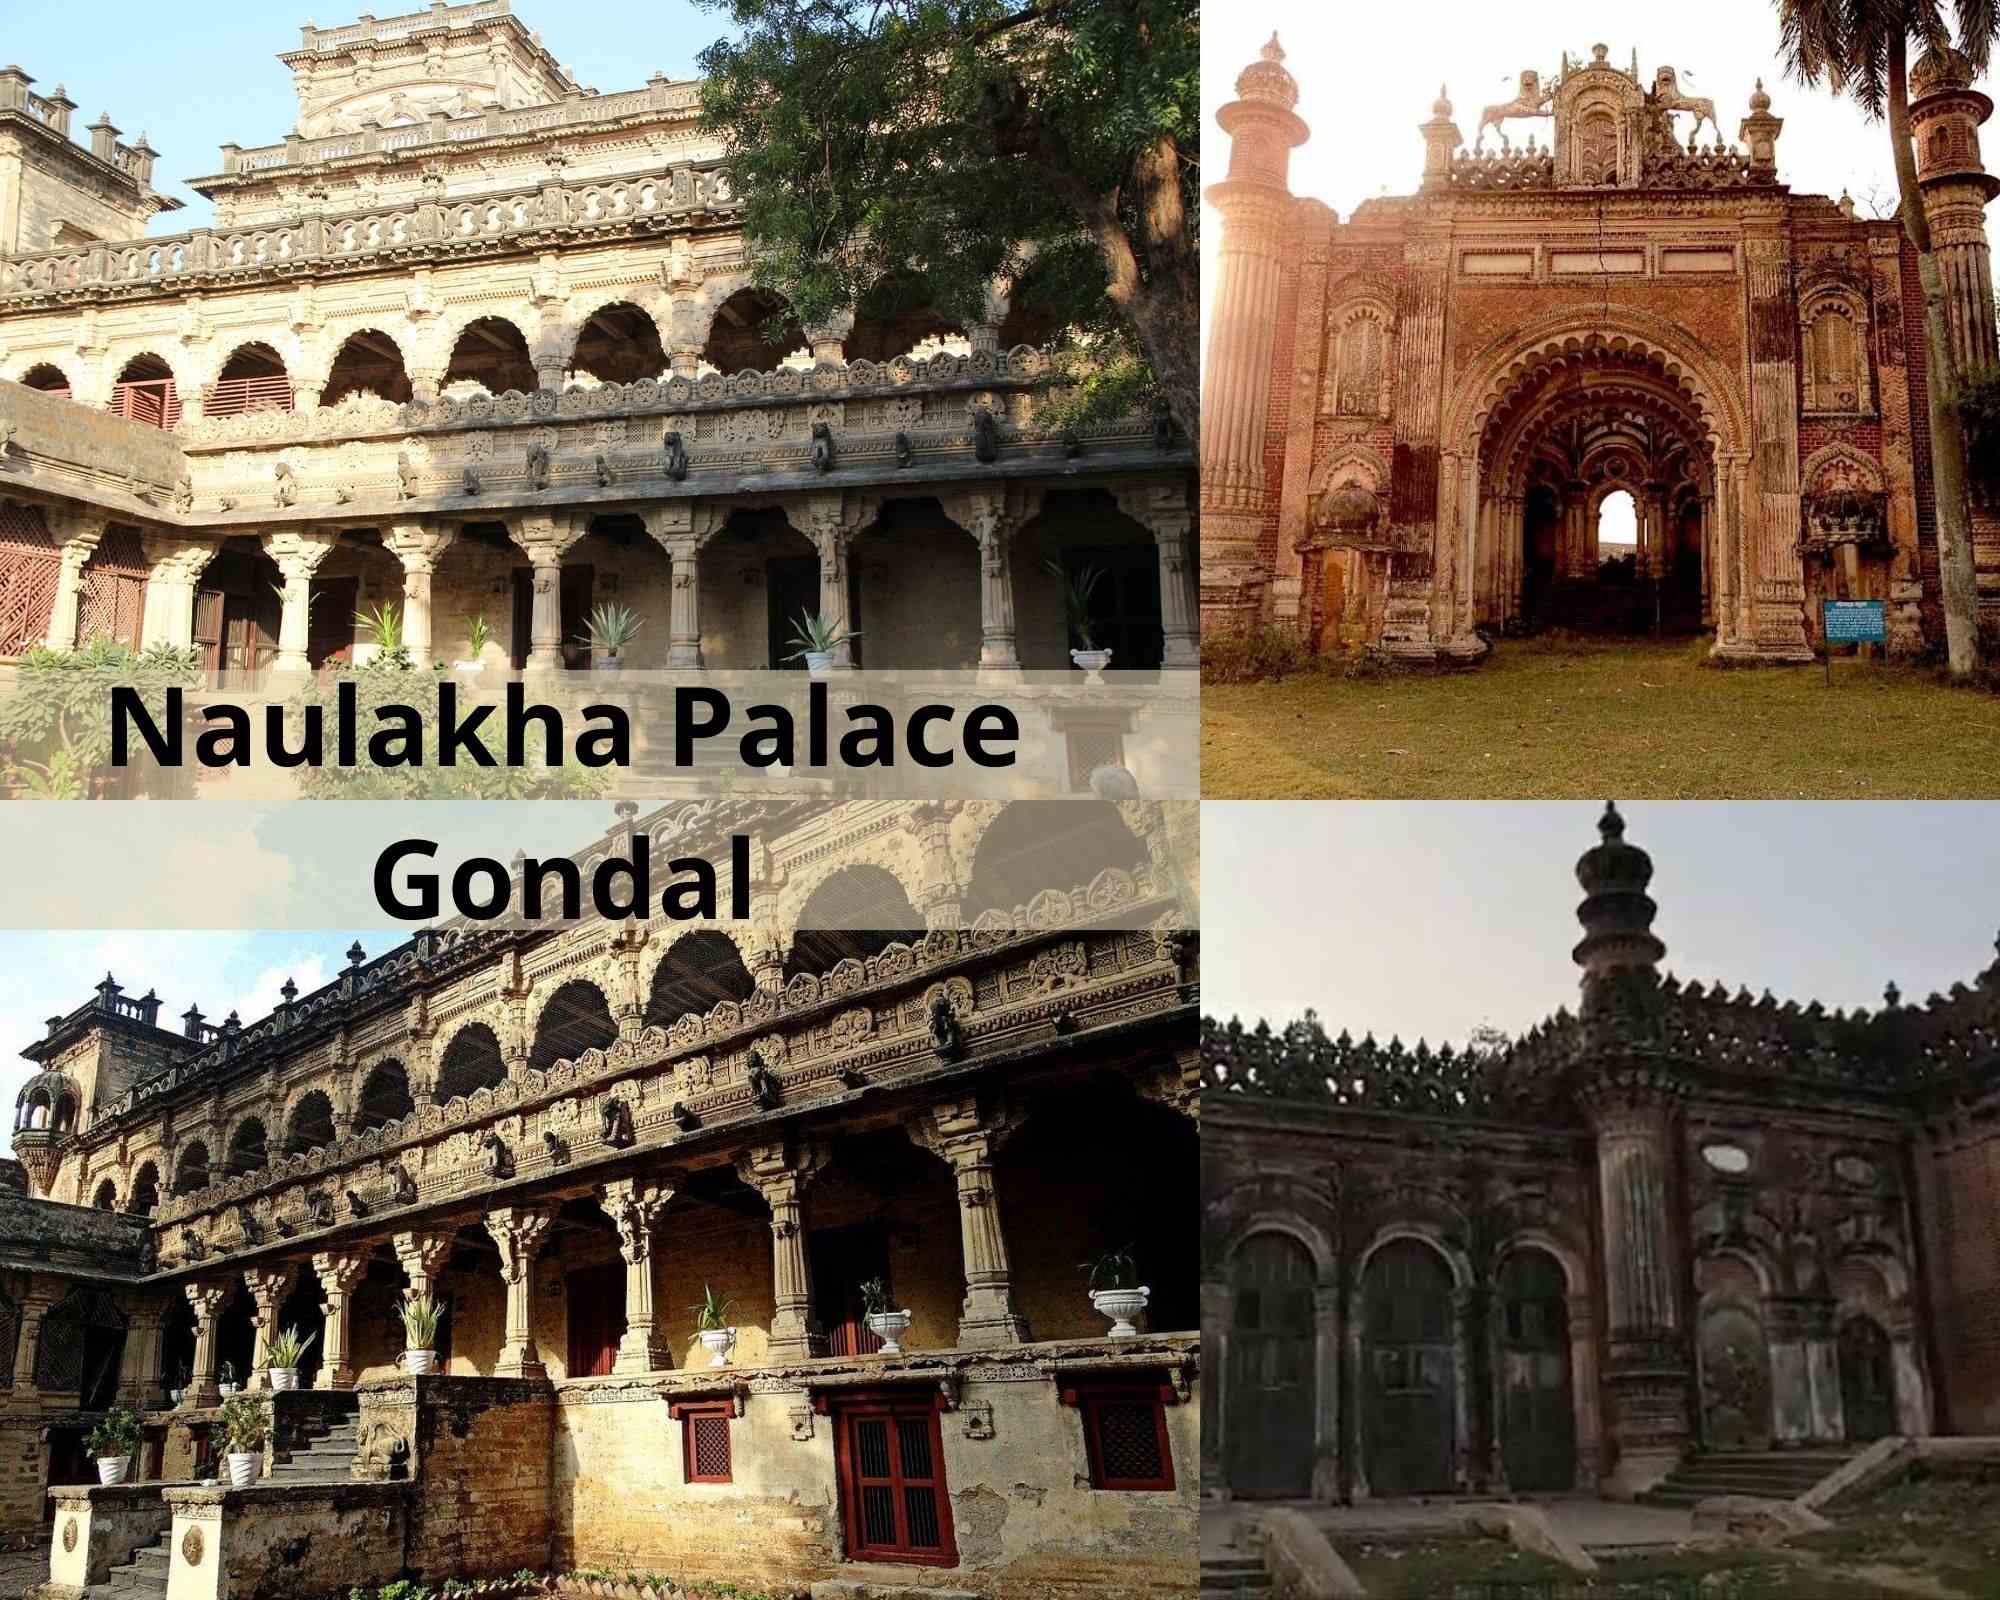 Naulakha Palace